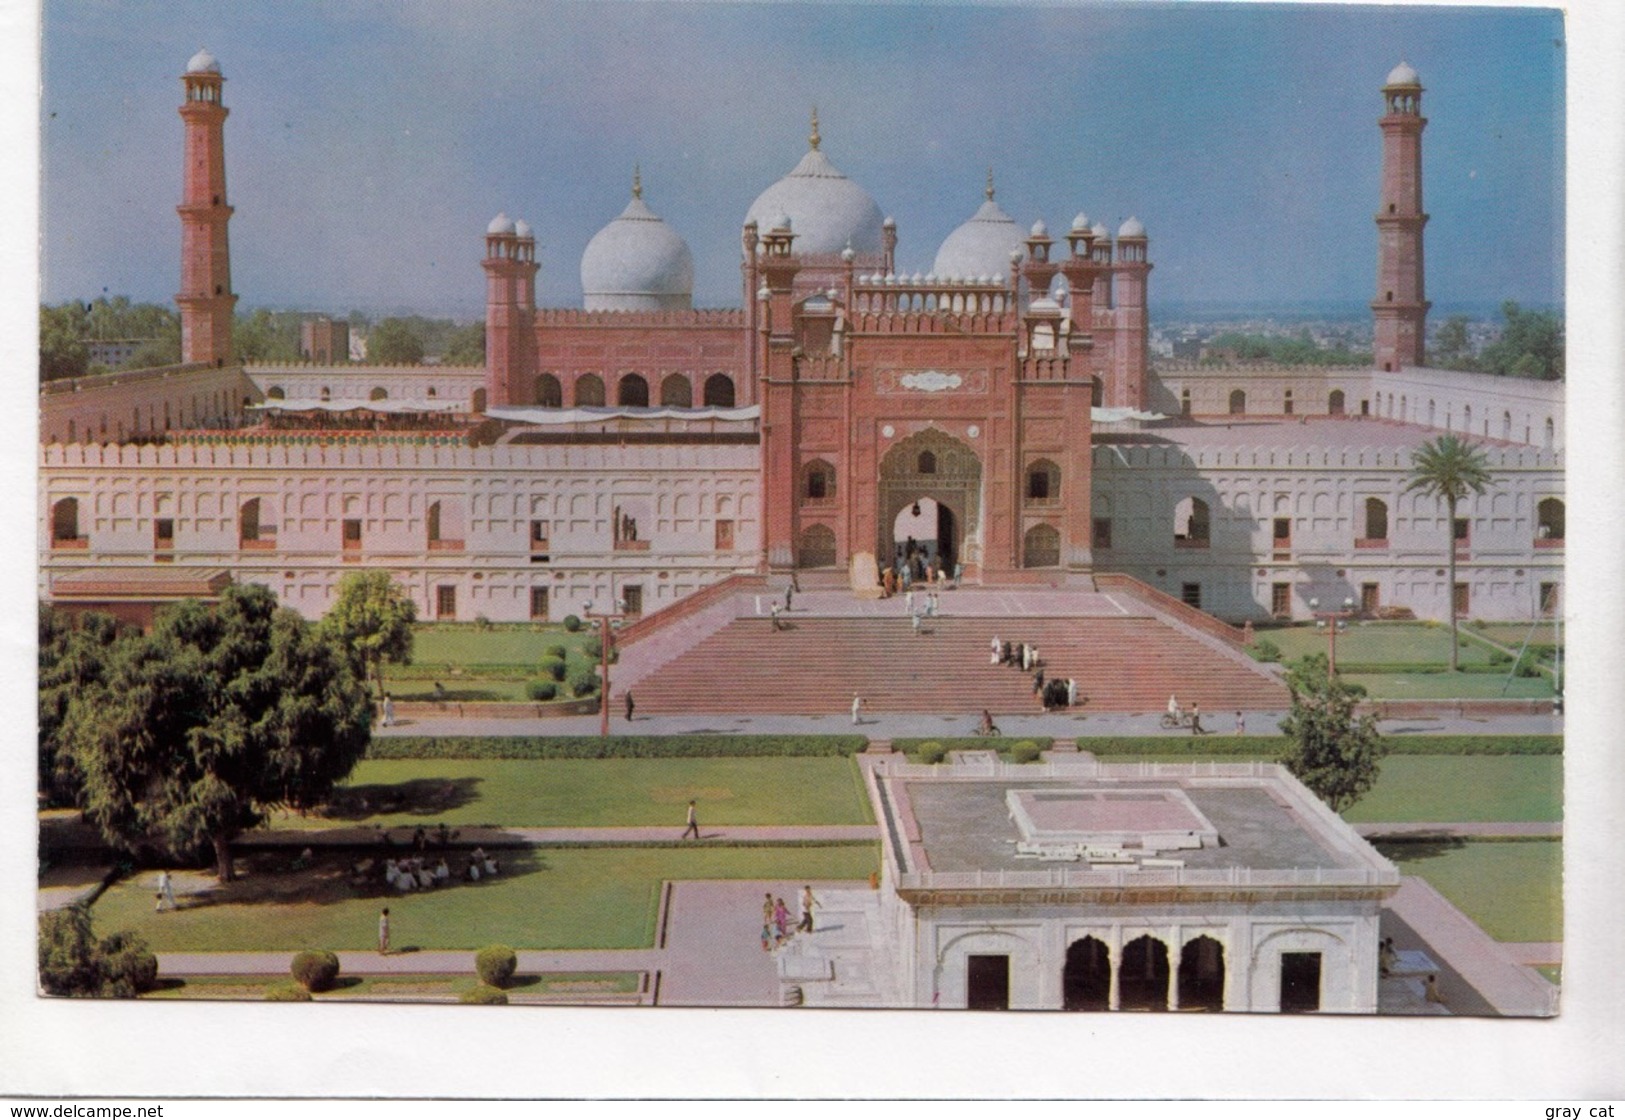 Badshahi Mosque, Lahore, Pakistan, 1984 Used Postcard [23696] - Pakistan